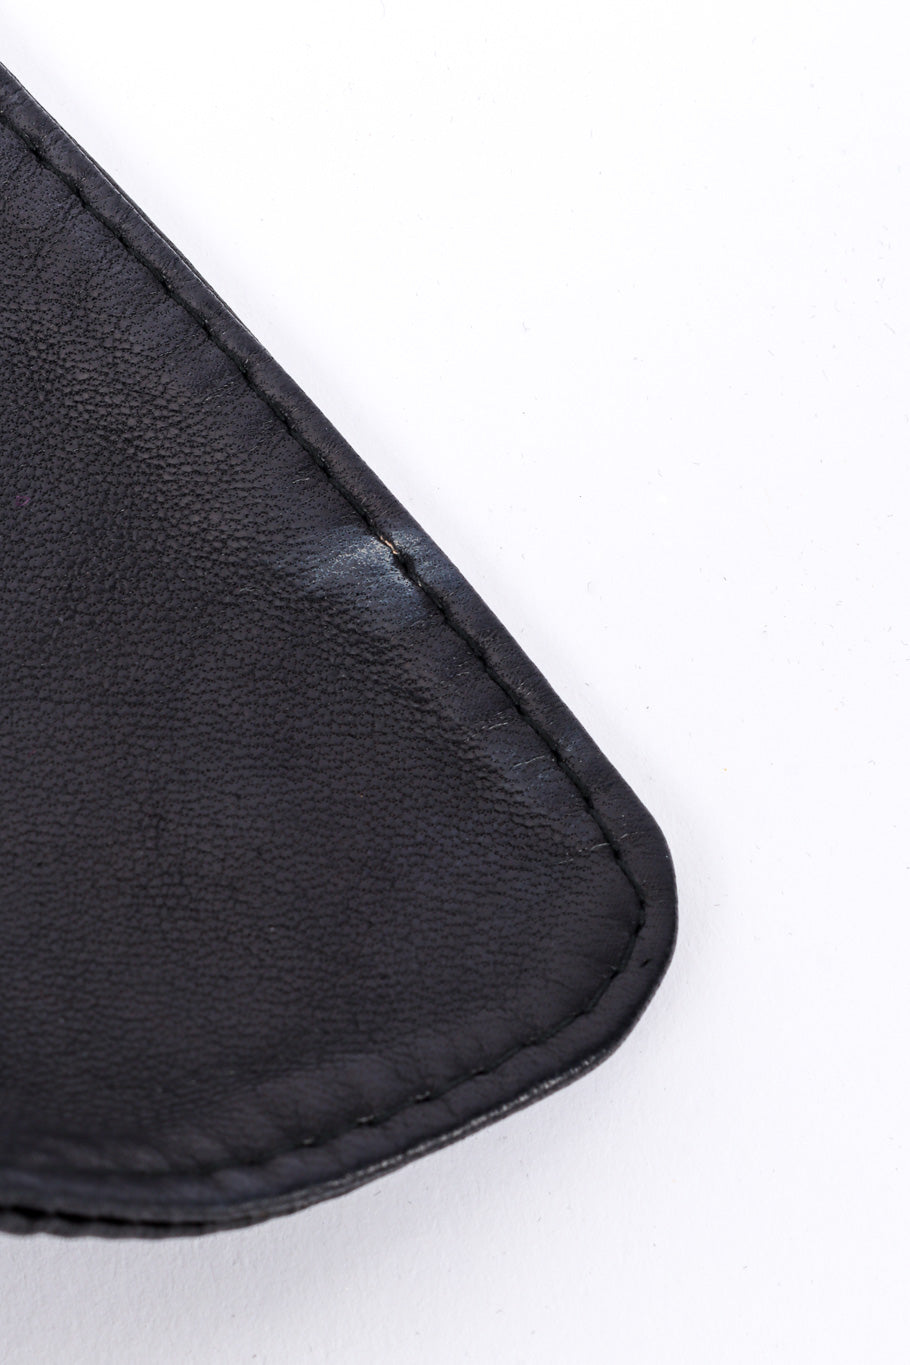 Vintage Lina Lee Studded Leather Jacket discoloration closeup @recessla